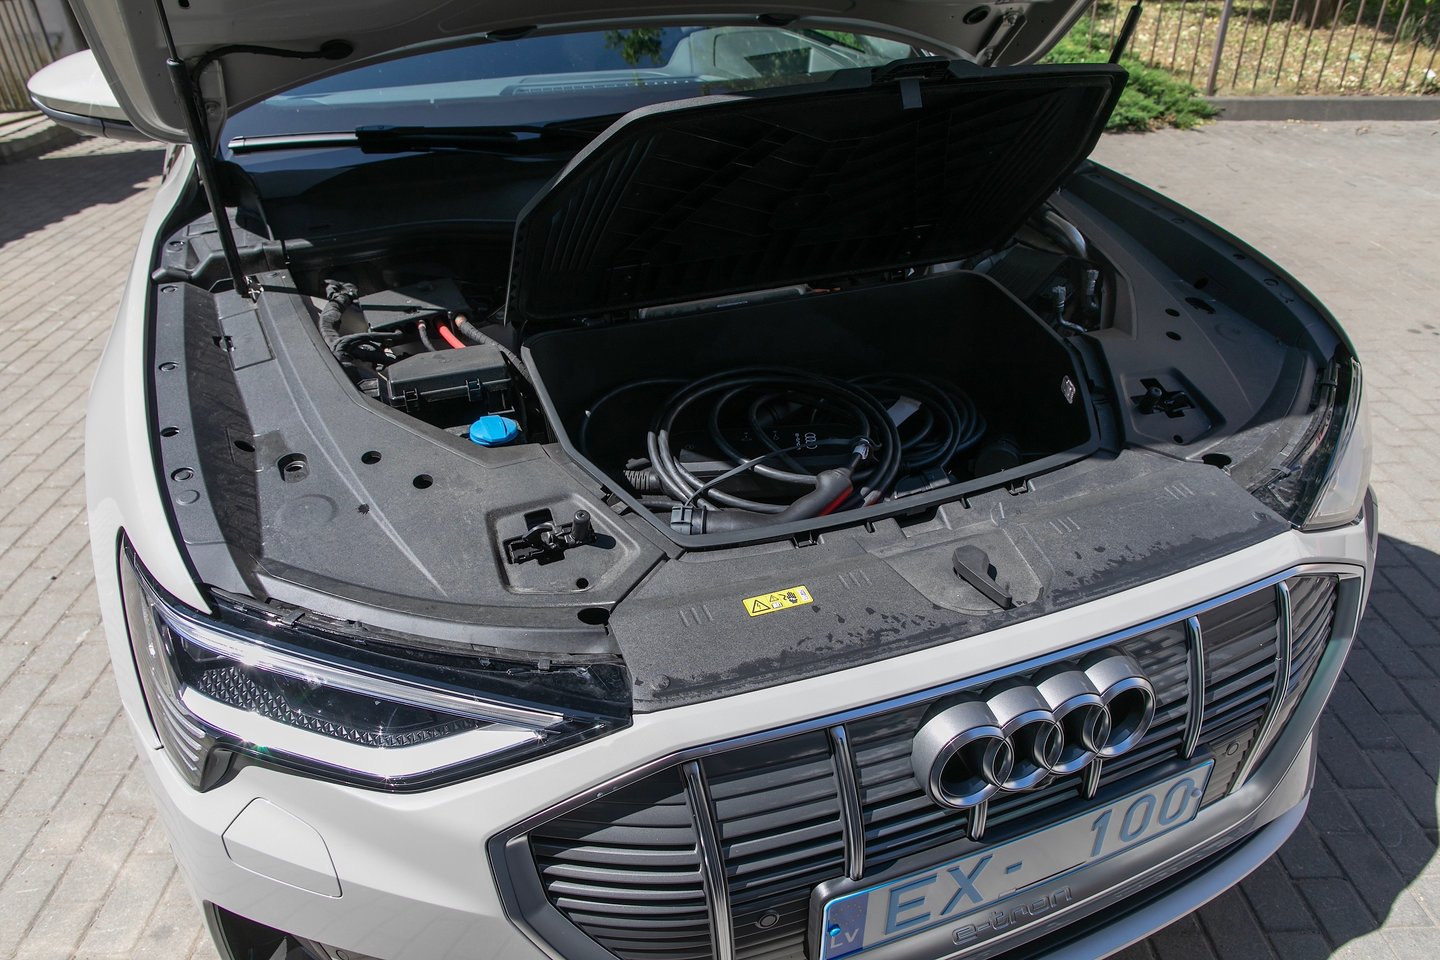  „Audi e-Tron“ elektrinis visureigis.<br> M. Ambrazo nuotr.